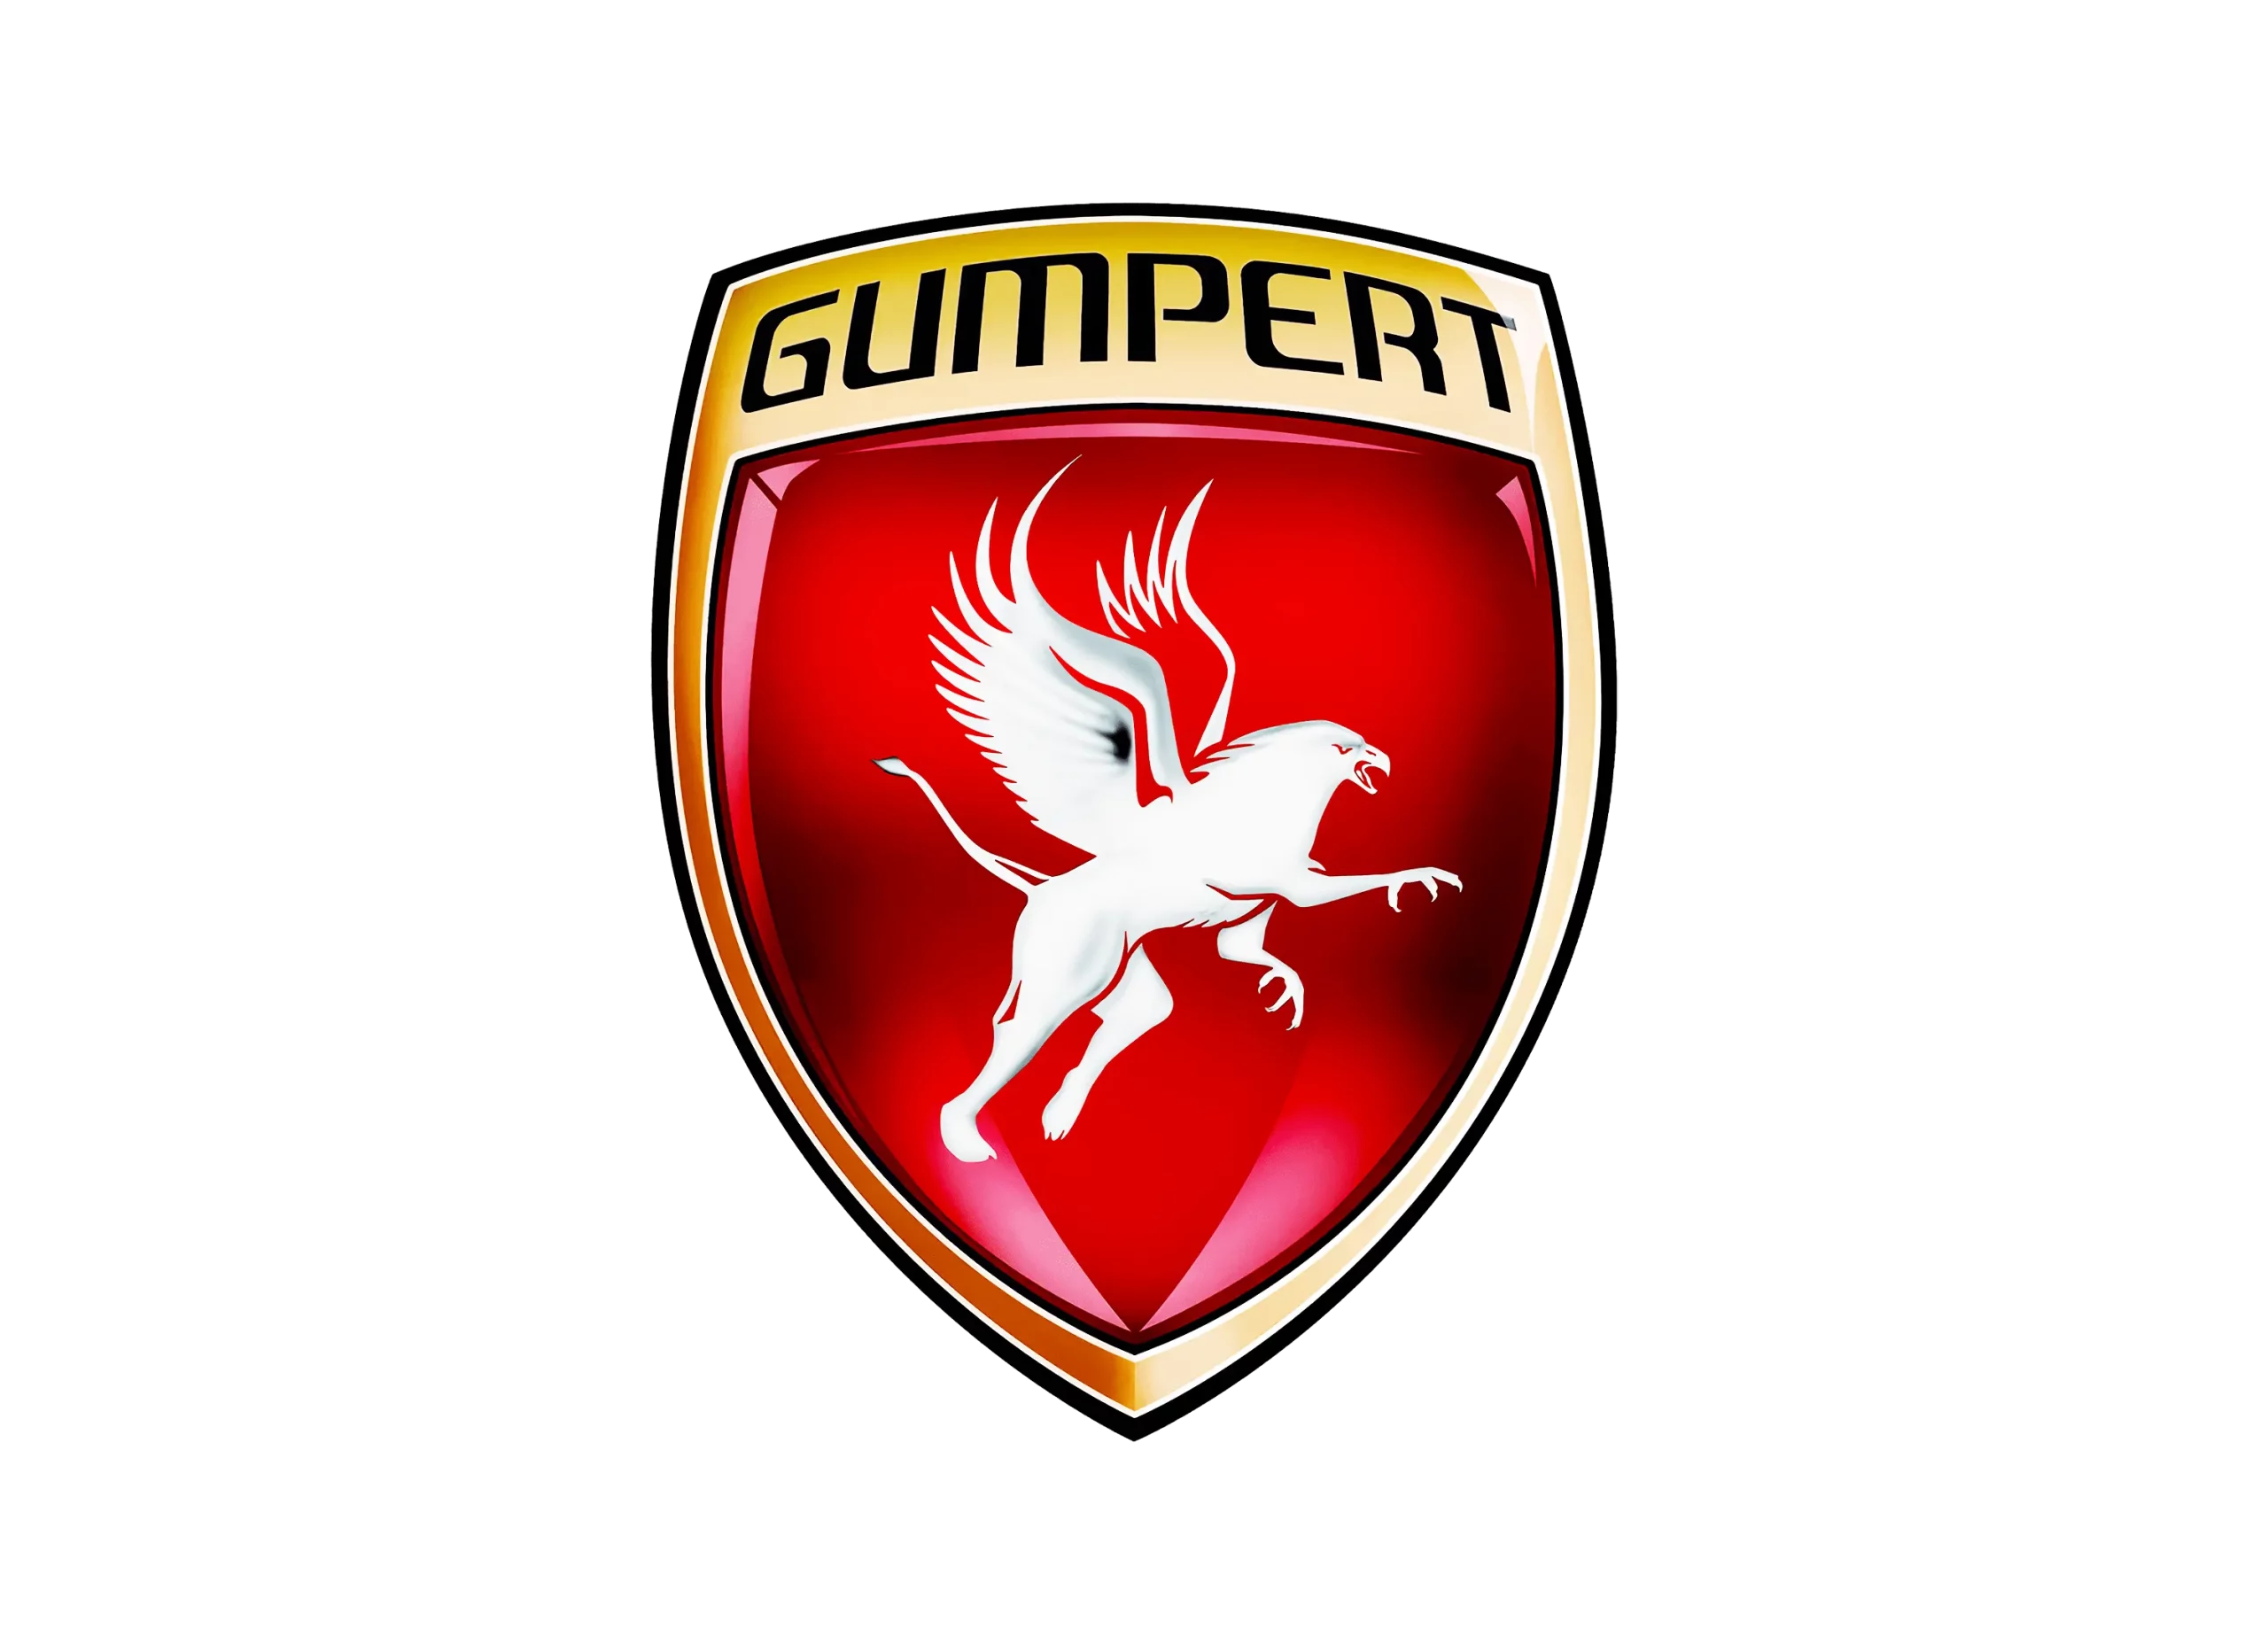 Gumpert logo 2004-2016